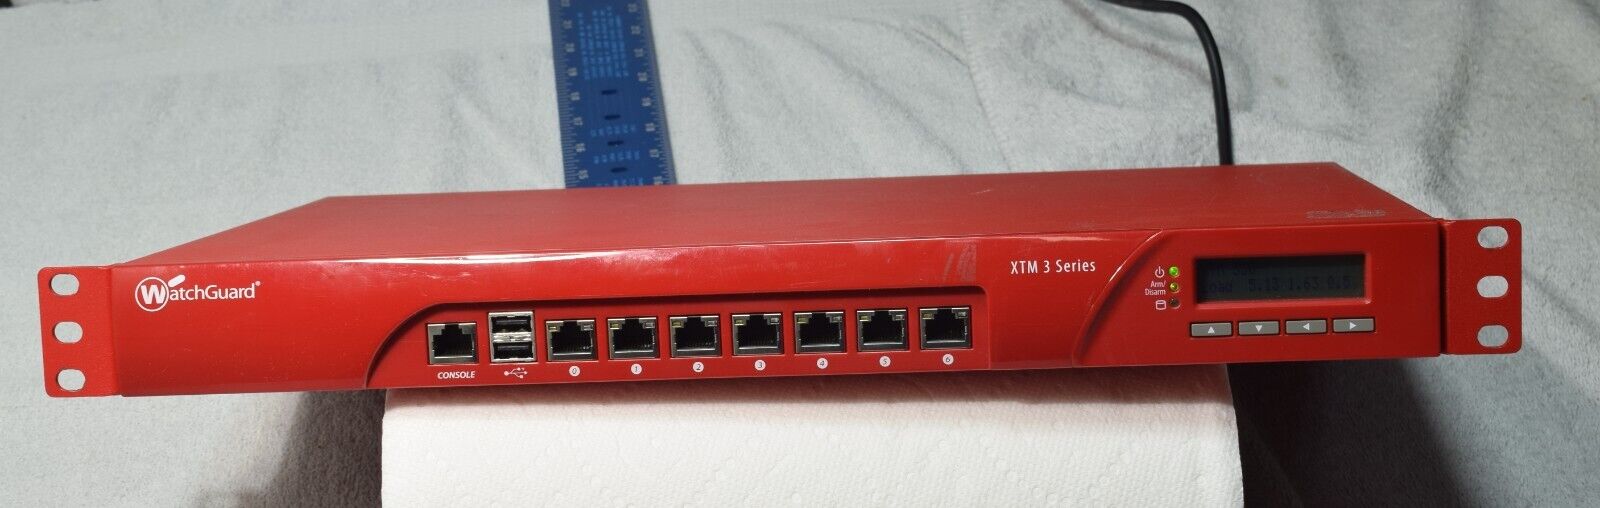 WatchGuard Firewall - XTM 330 HW Model NC5AE7 #J151